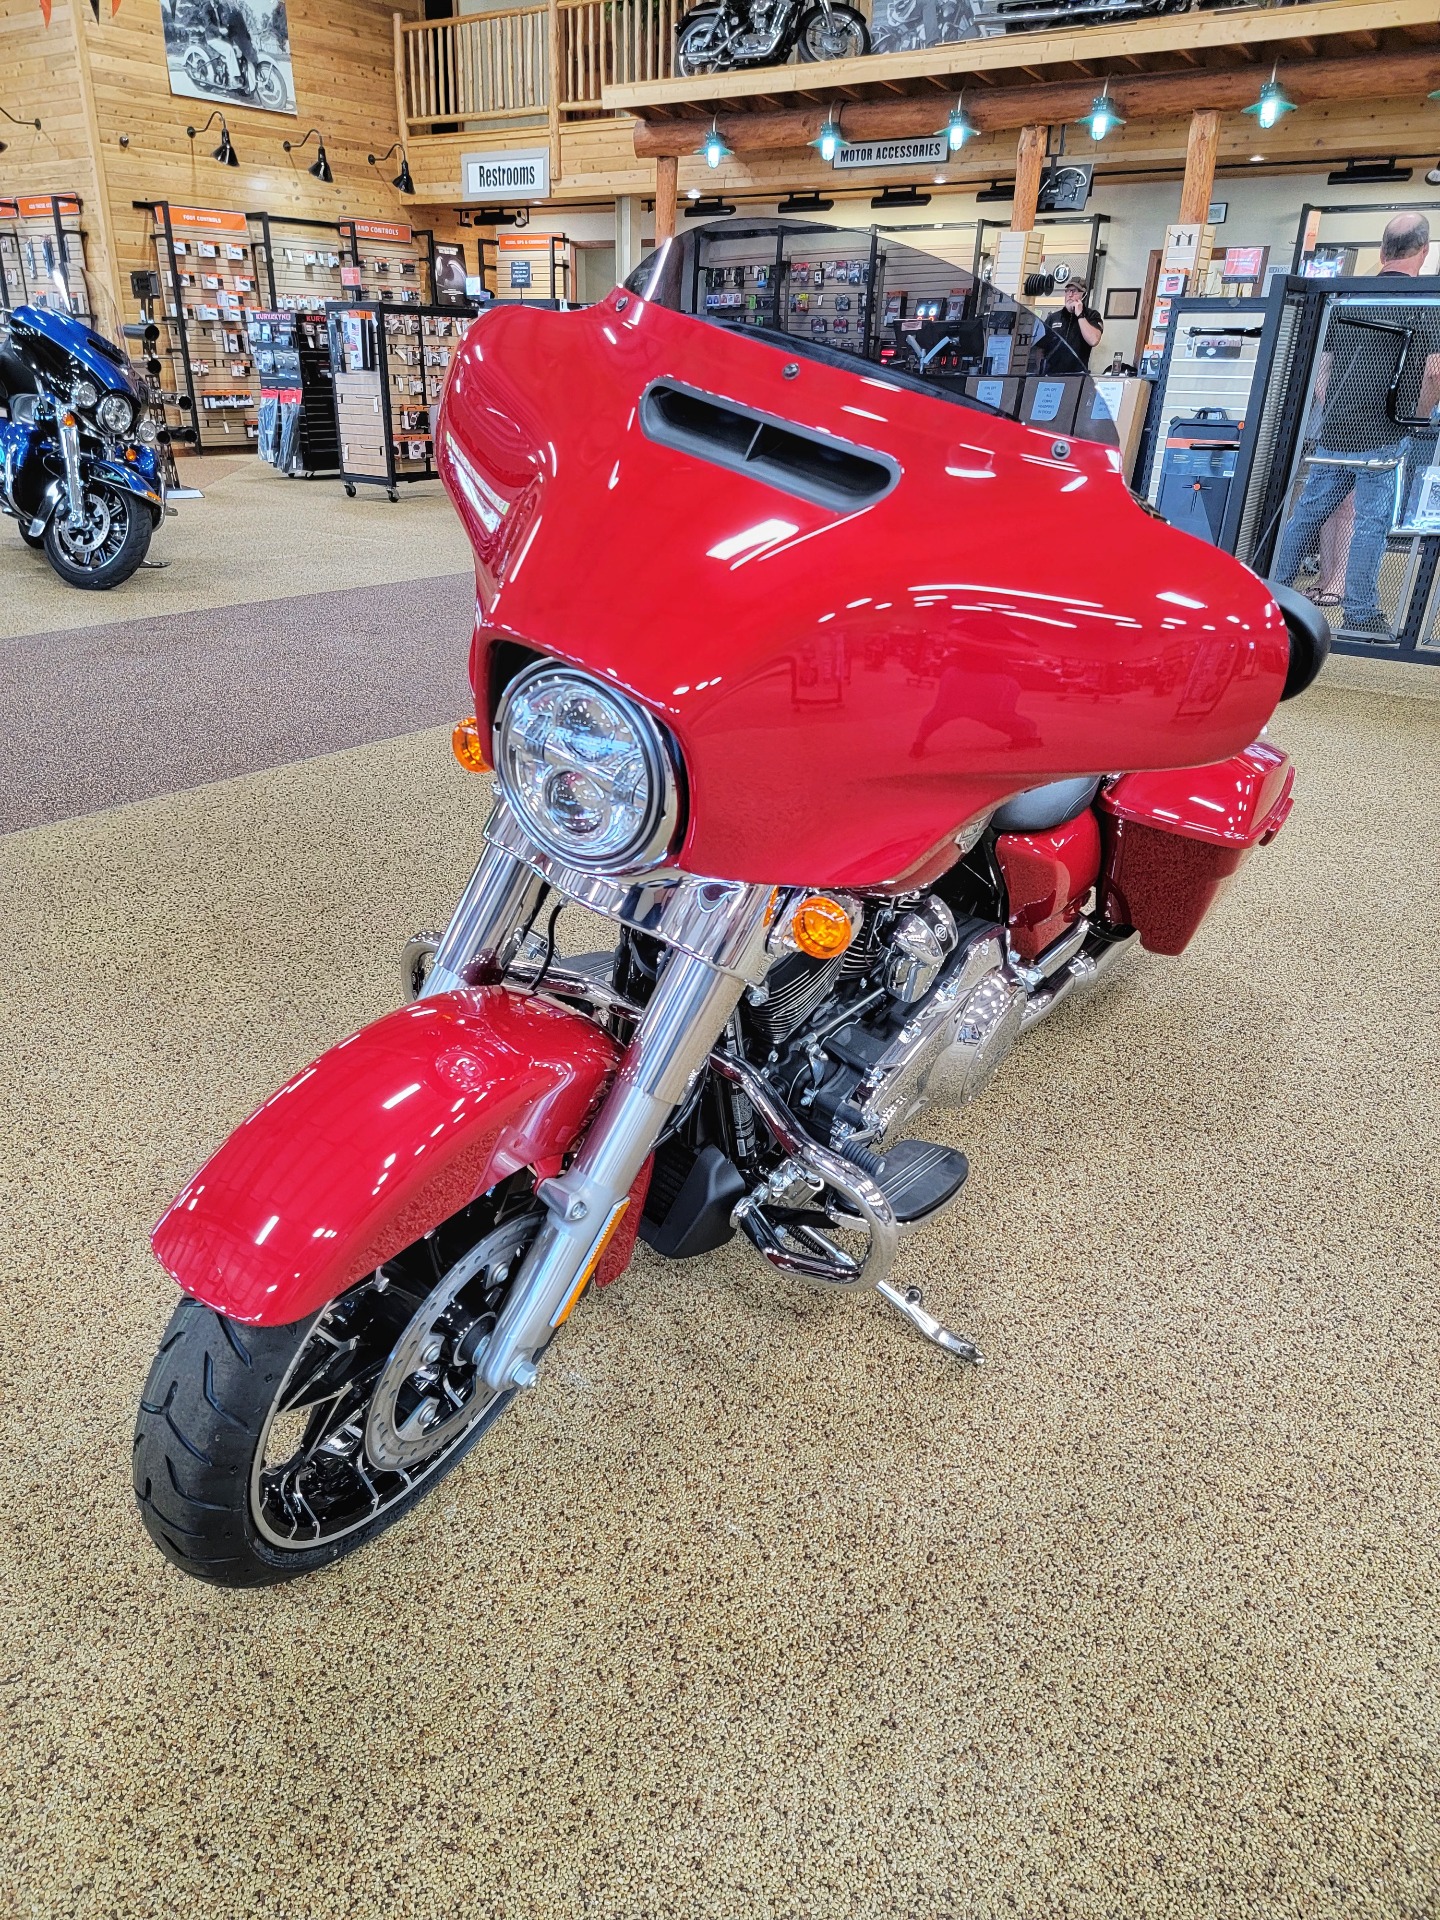 New 2021 Harley Davidson Street Glide Special Billiard Red Chrome Option Motorcycles In Sauk Rapids Mn Fl619746